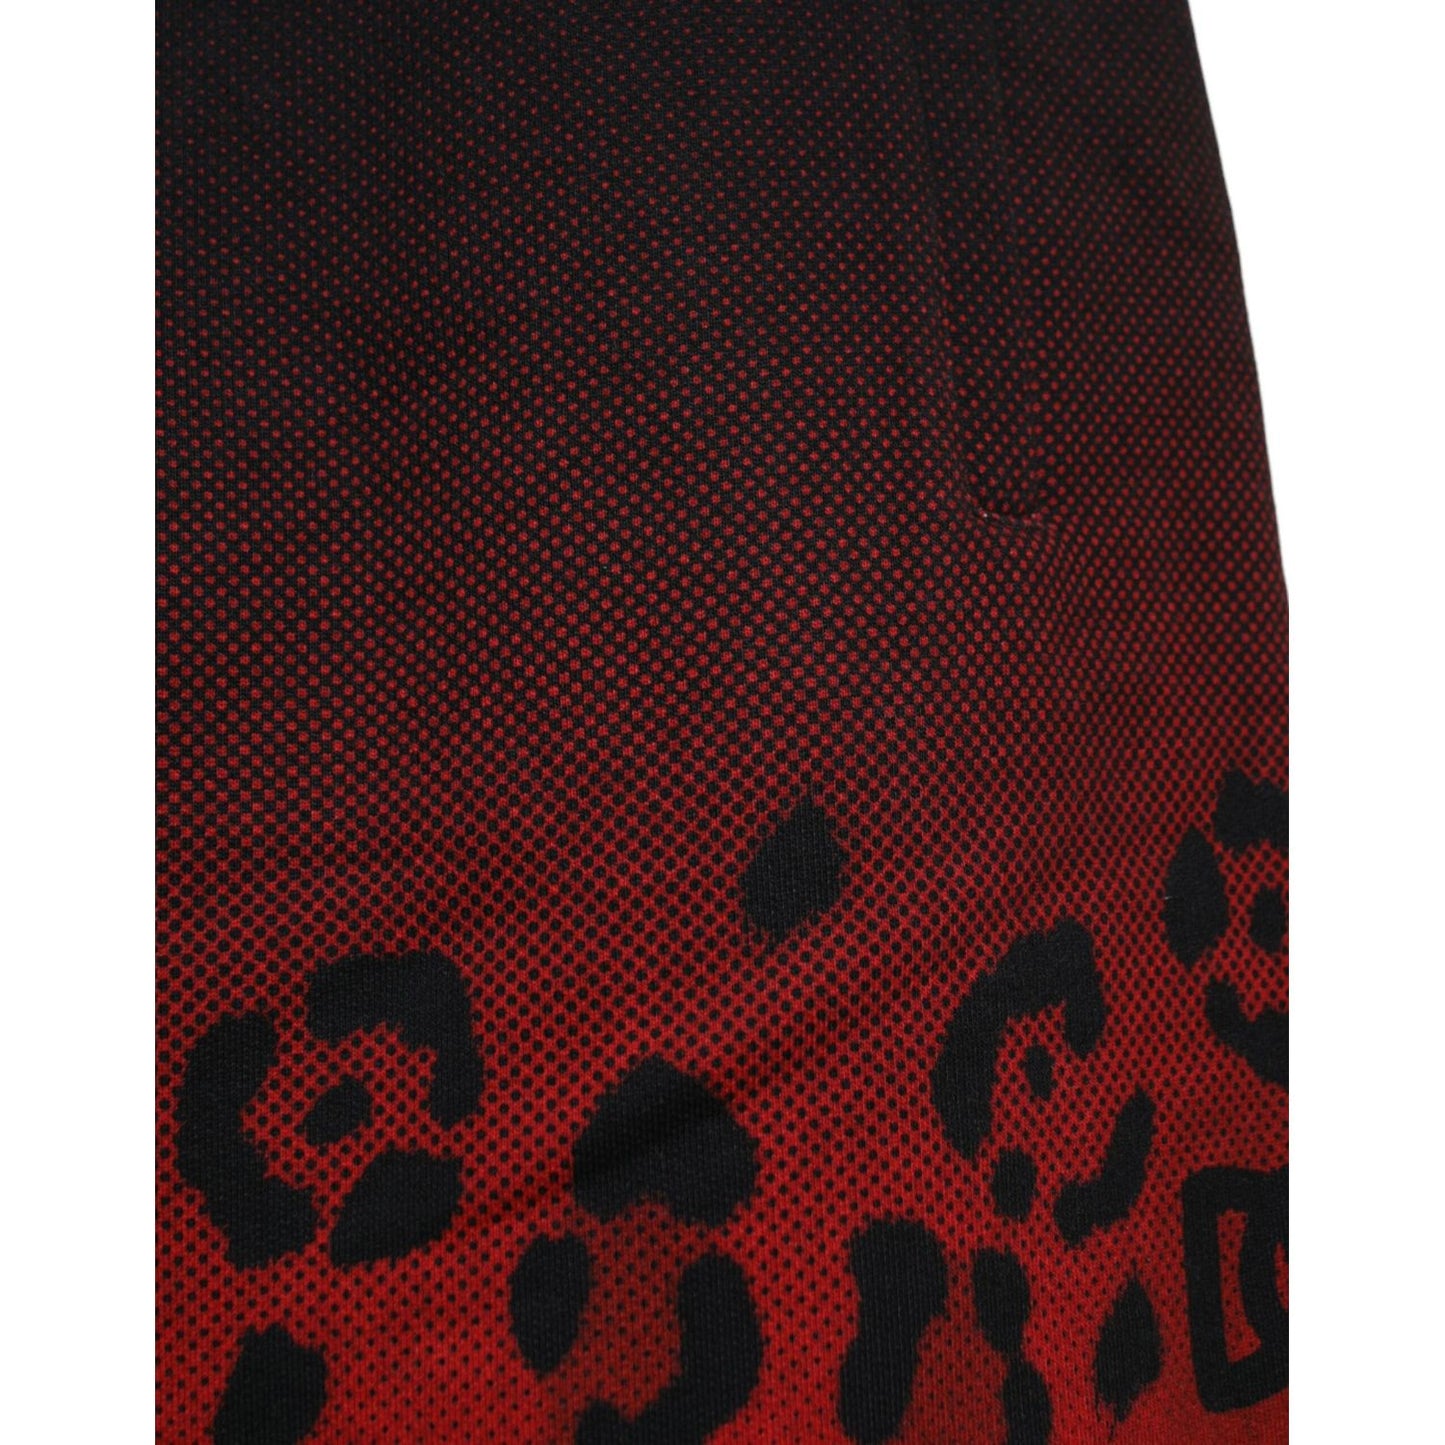 Dolce & Gabbana Red Leopard Print Cotton Bermuda Shorts red-leopard-print-cotton-bermuda-shorts